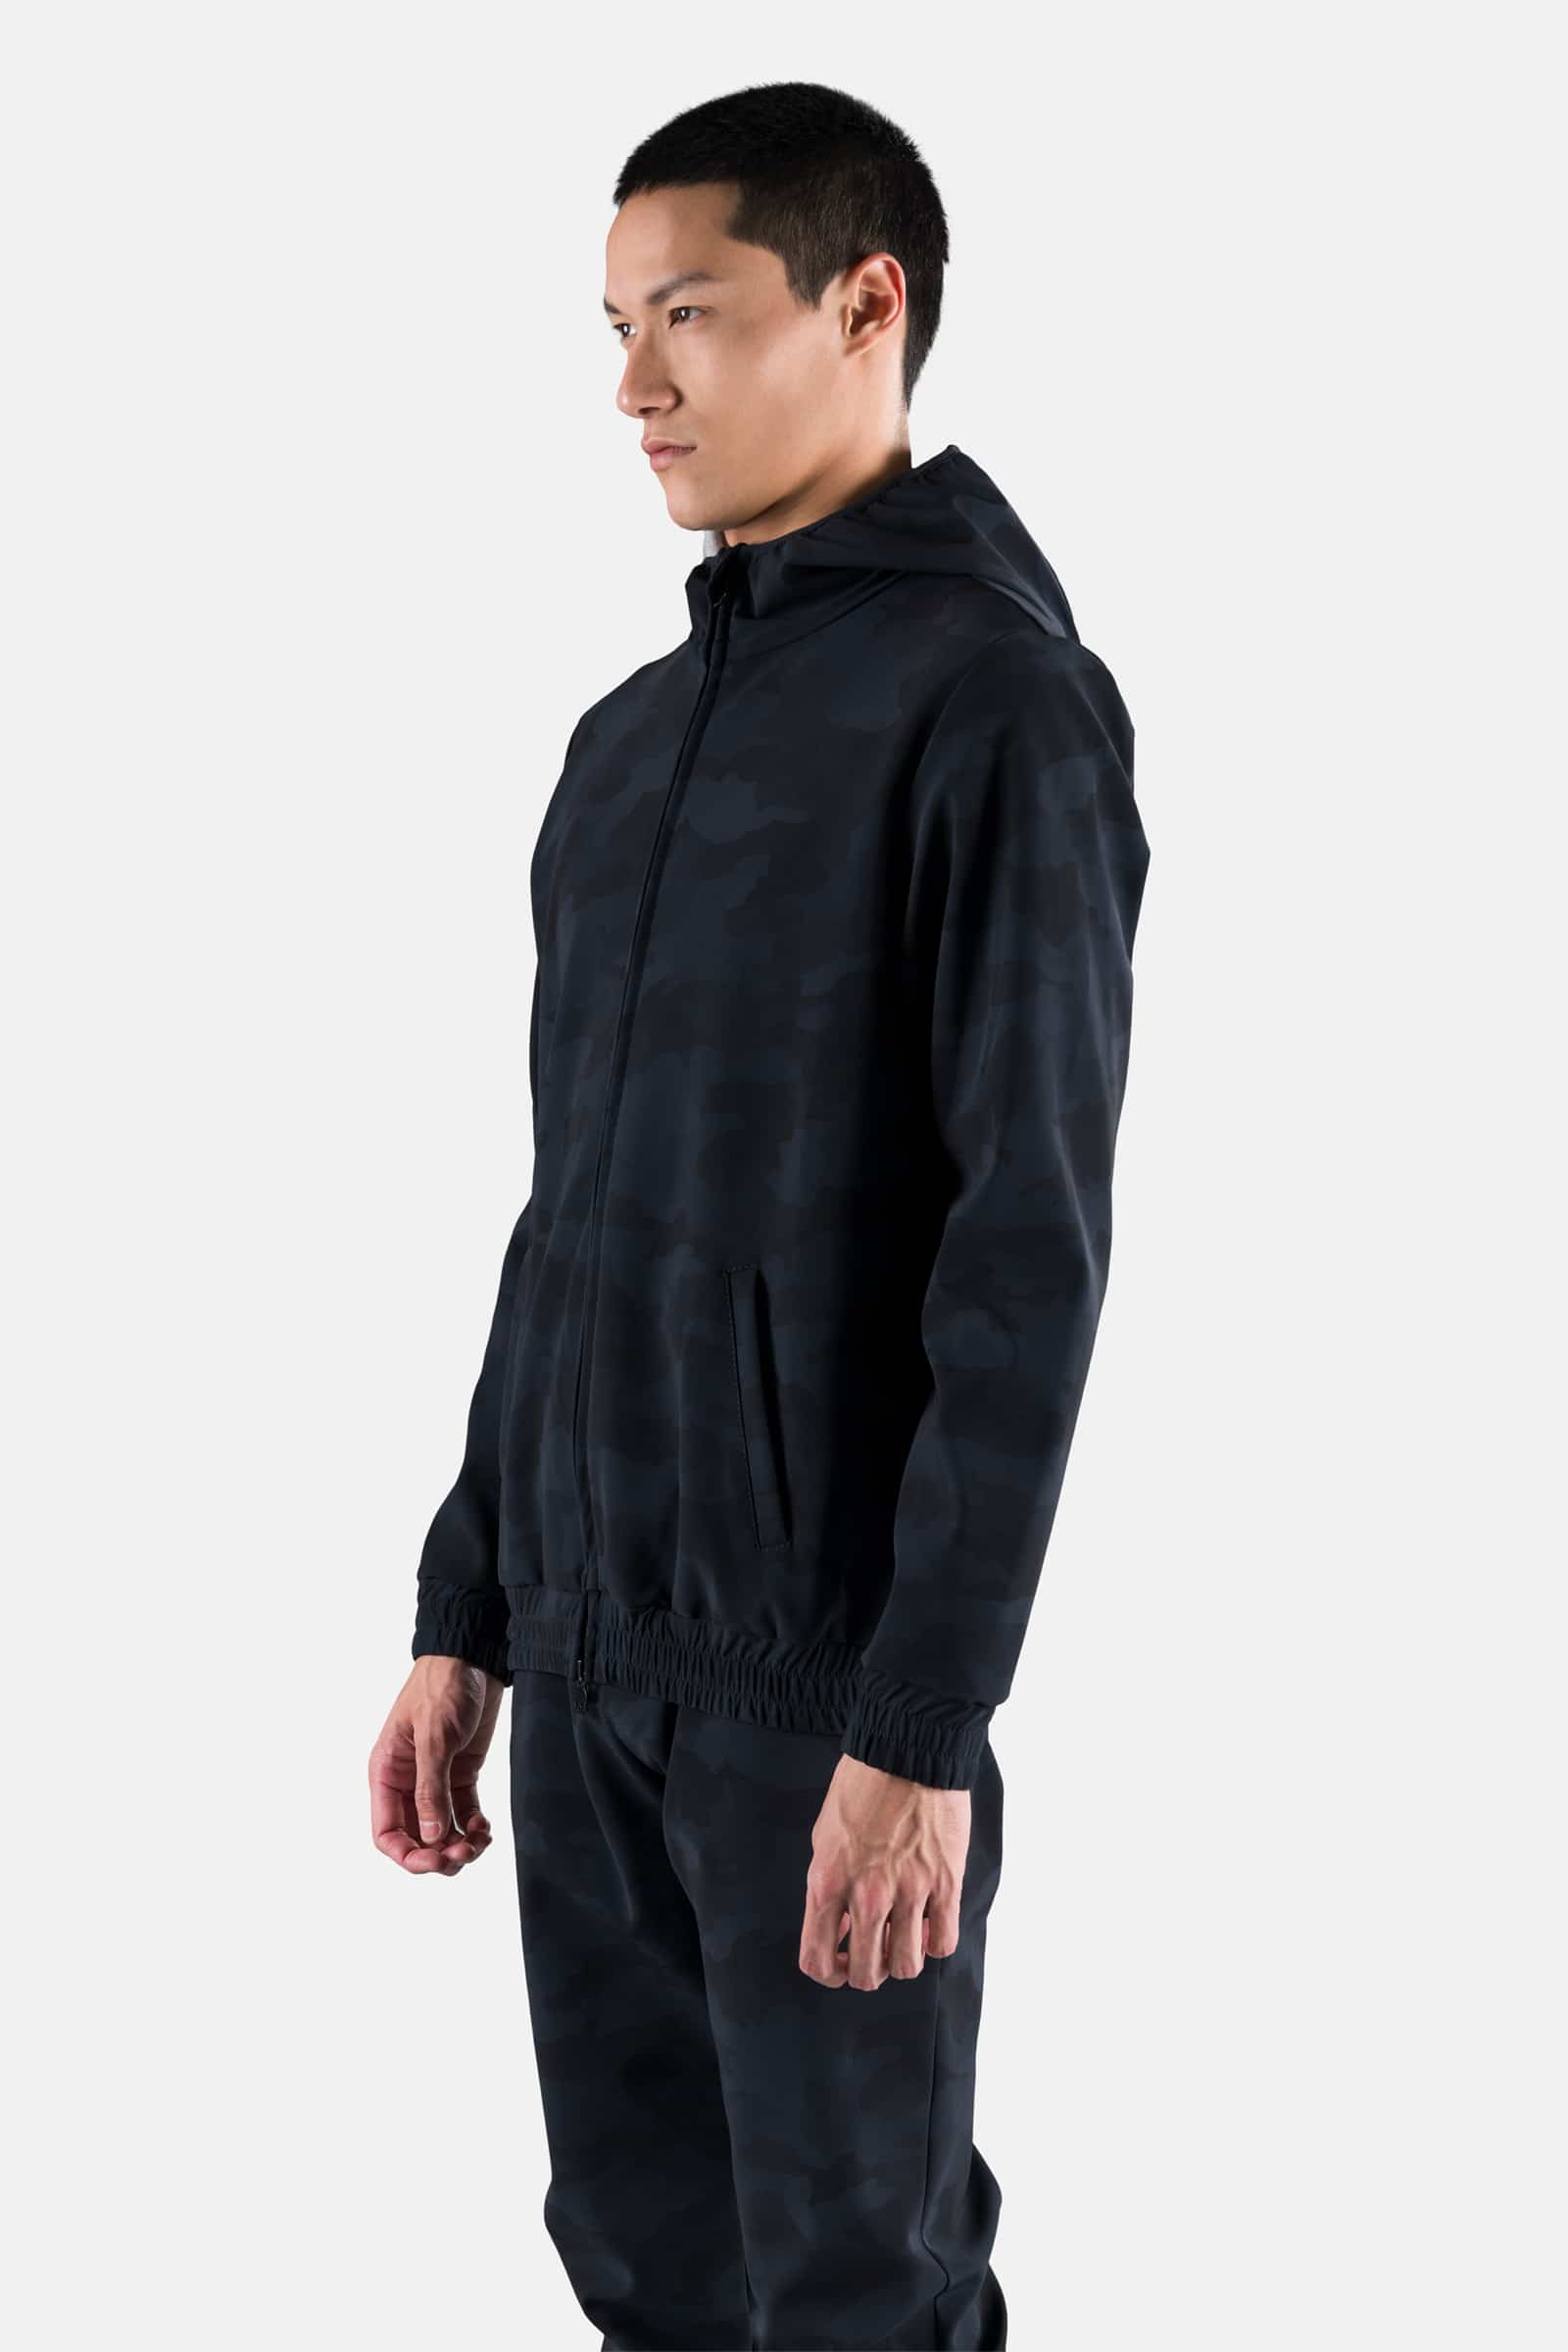 URBAN HOODIE - BLACK CAMOUFLAGE - Hydrogen - Luxury Sportwear